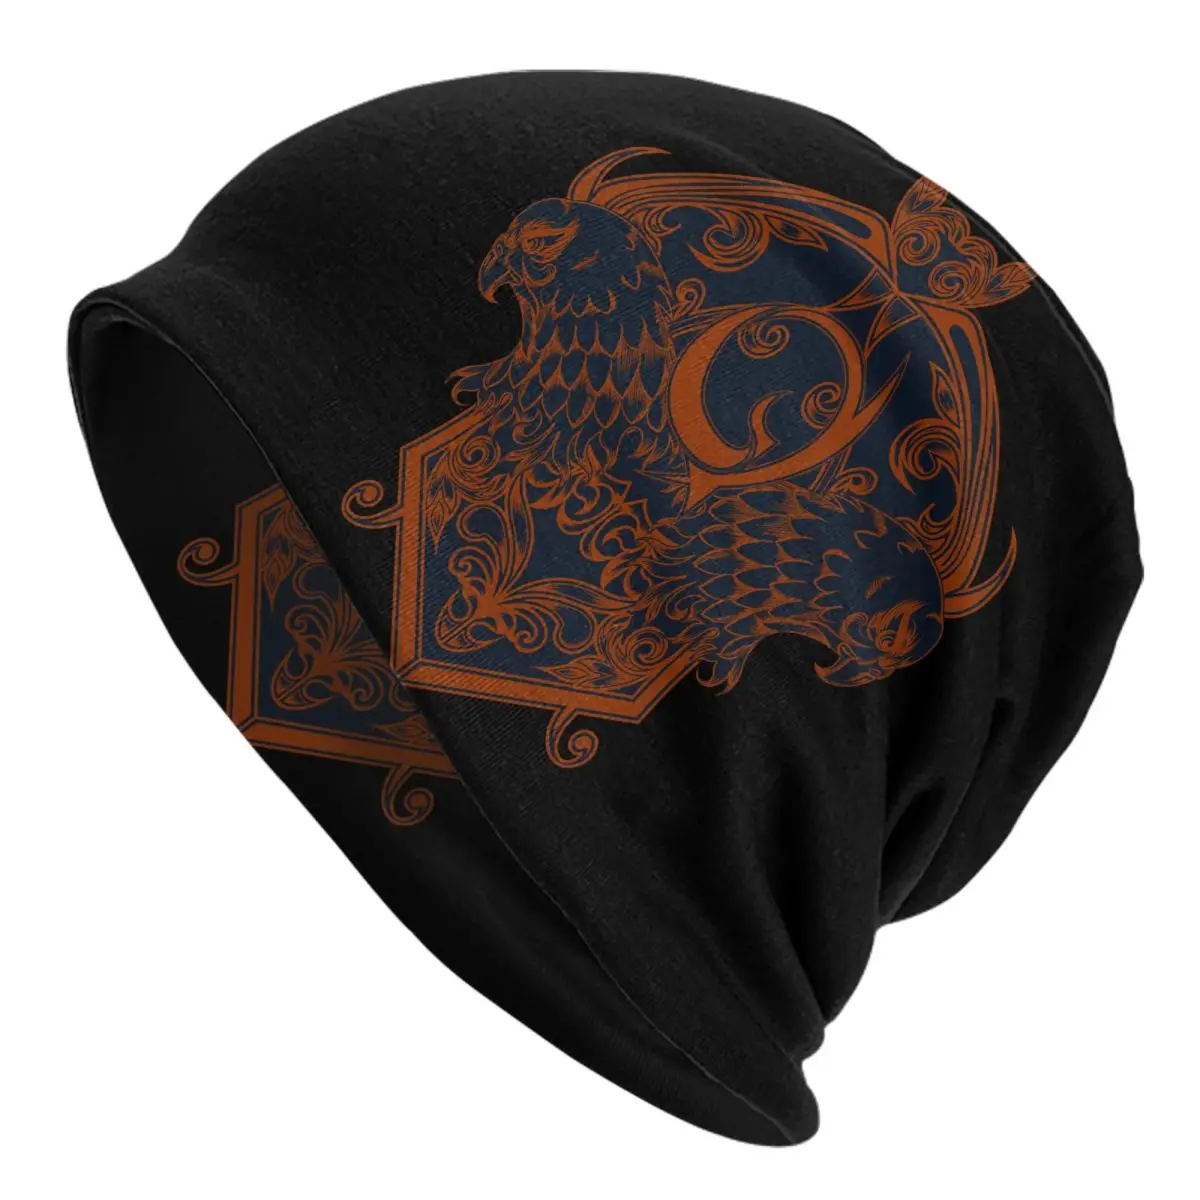 Badge Adult Men's Women's Knit Hat Keep warm winter knitted hat